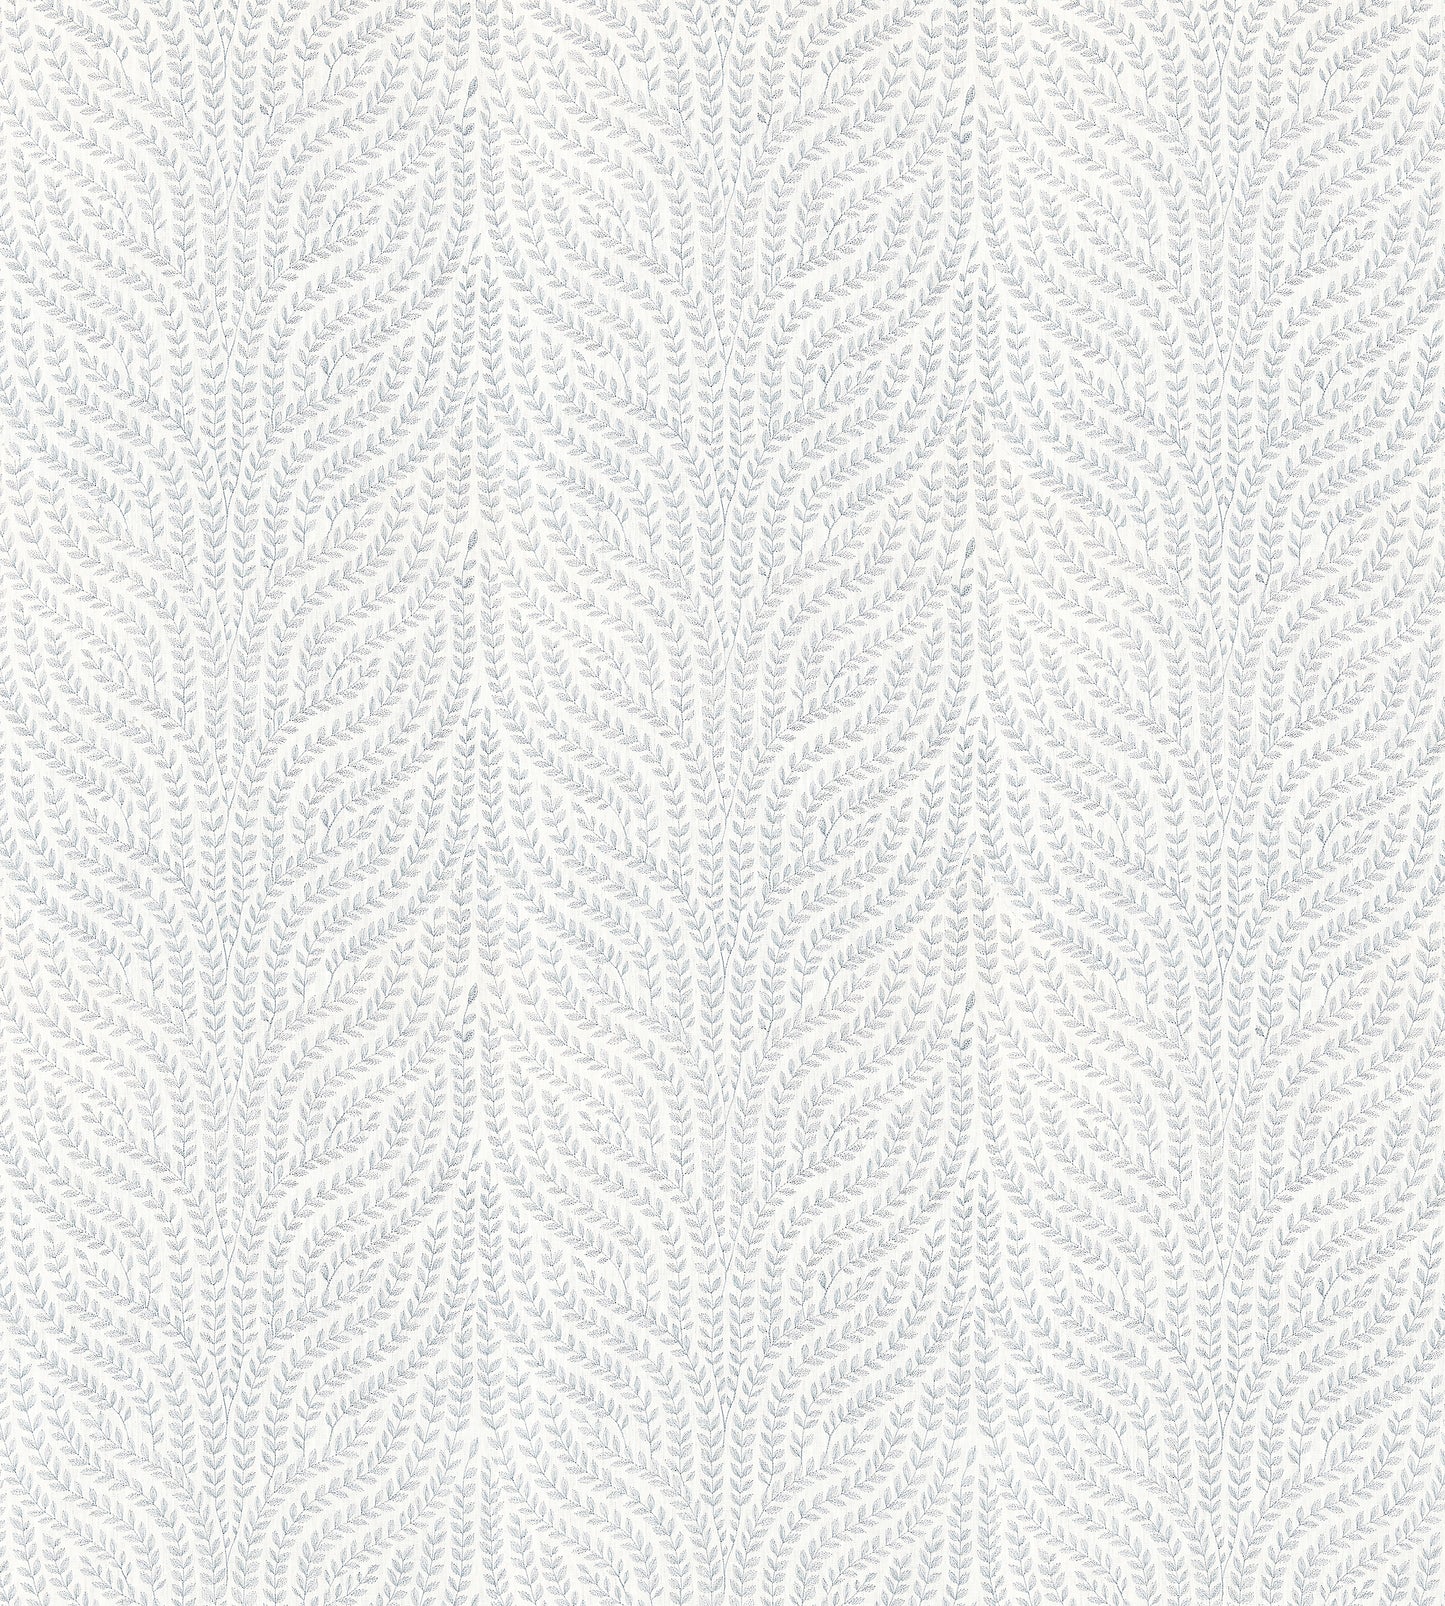 Purchase Scalamandre Fabric Pattern# SC 000127125, Willow Vine Embroidery Aquamarine 4